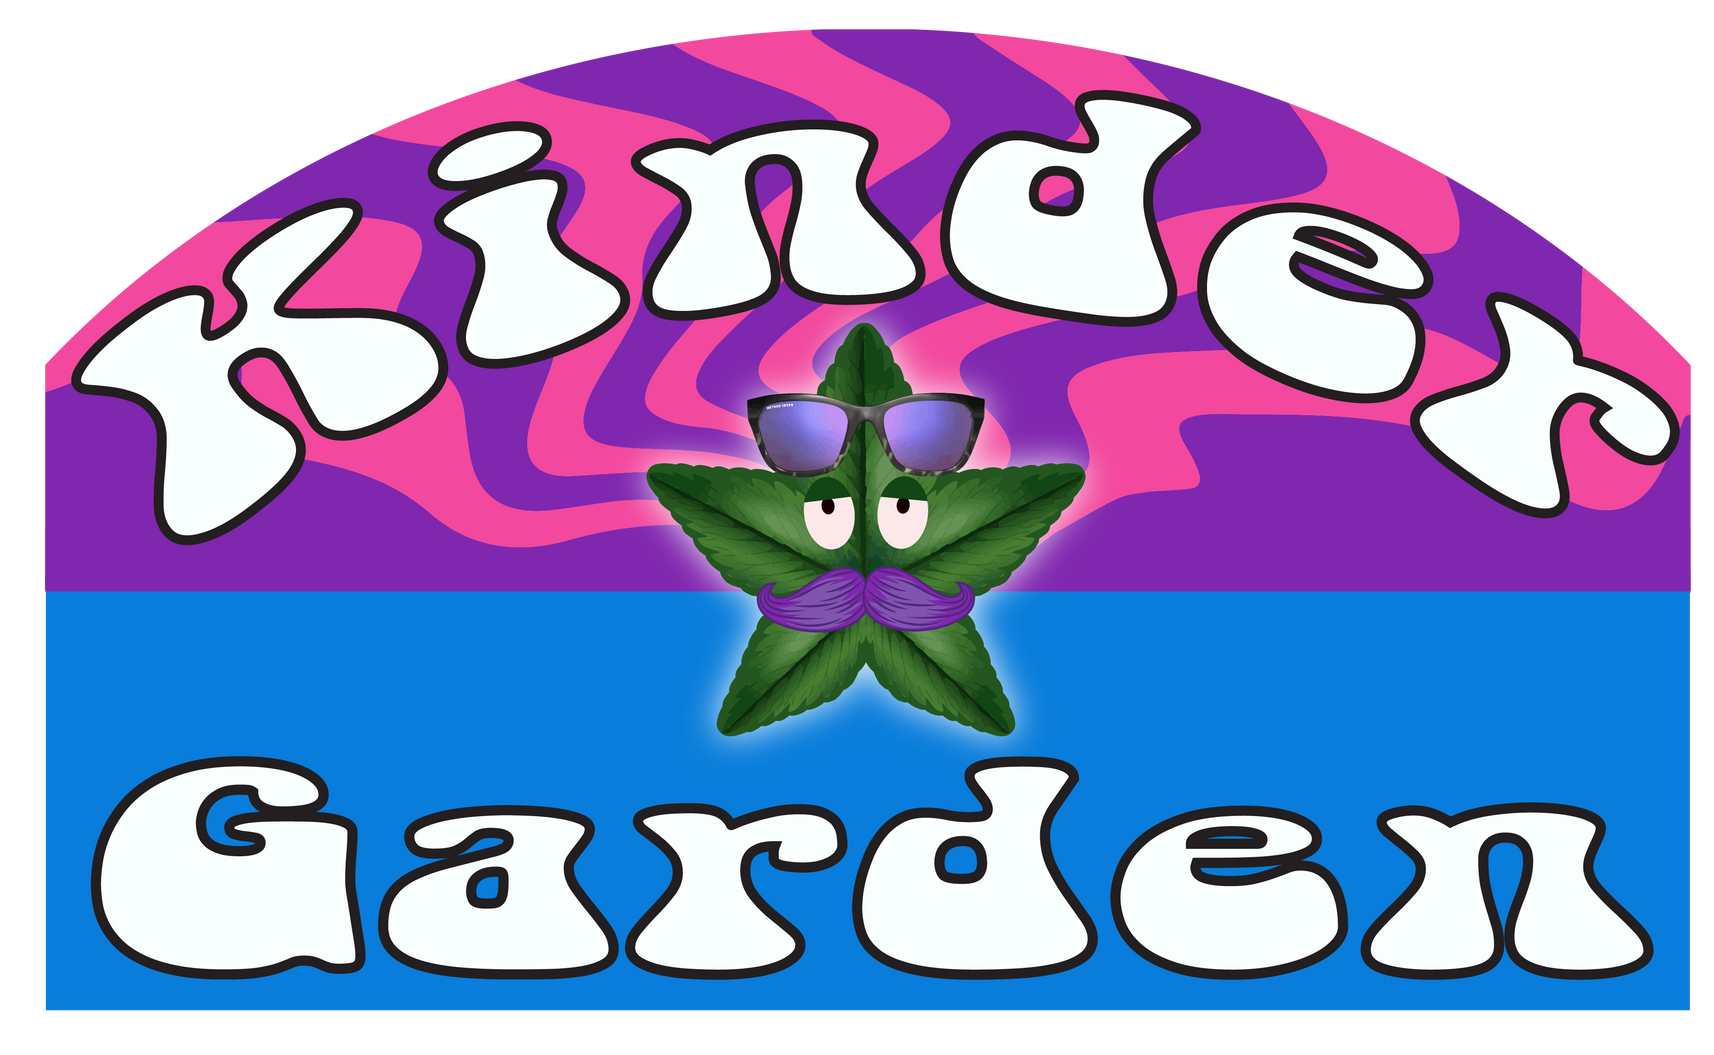 Kinder Garden LLC